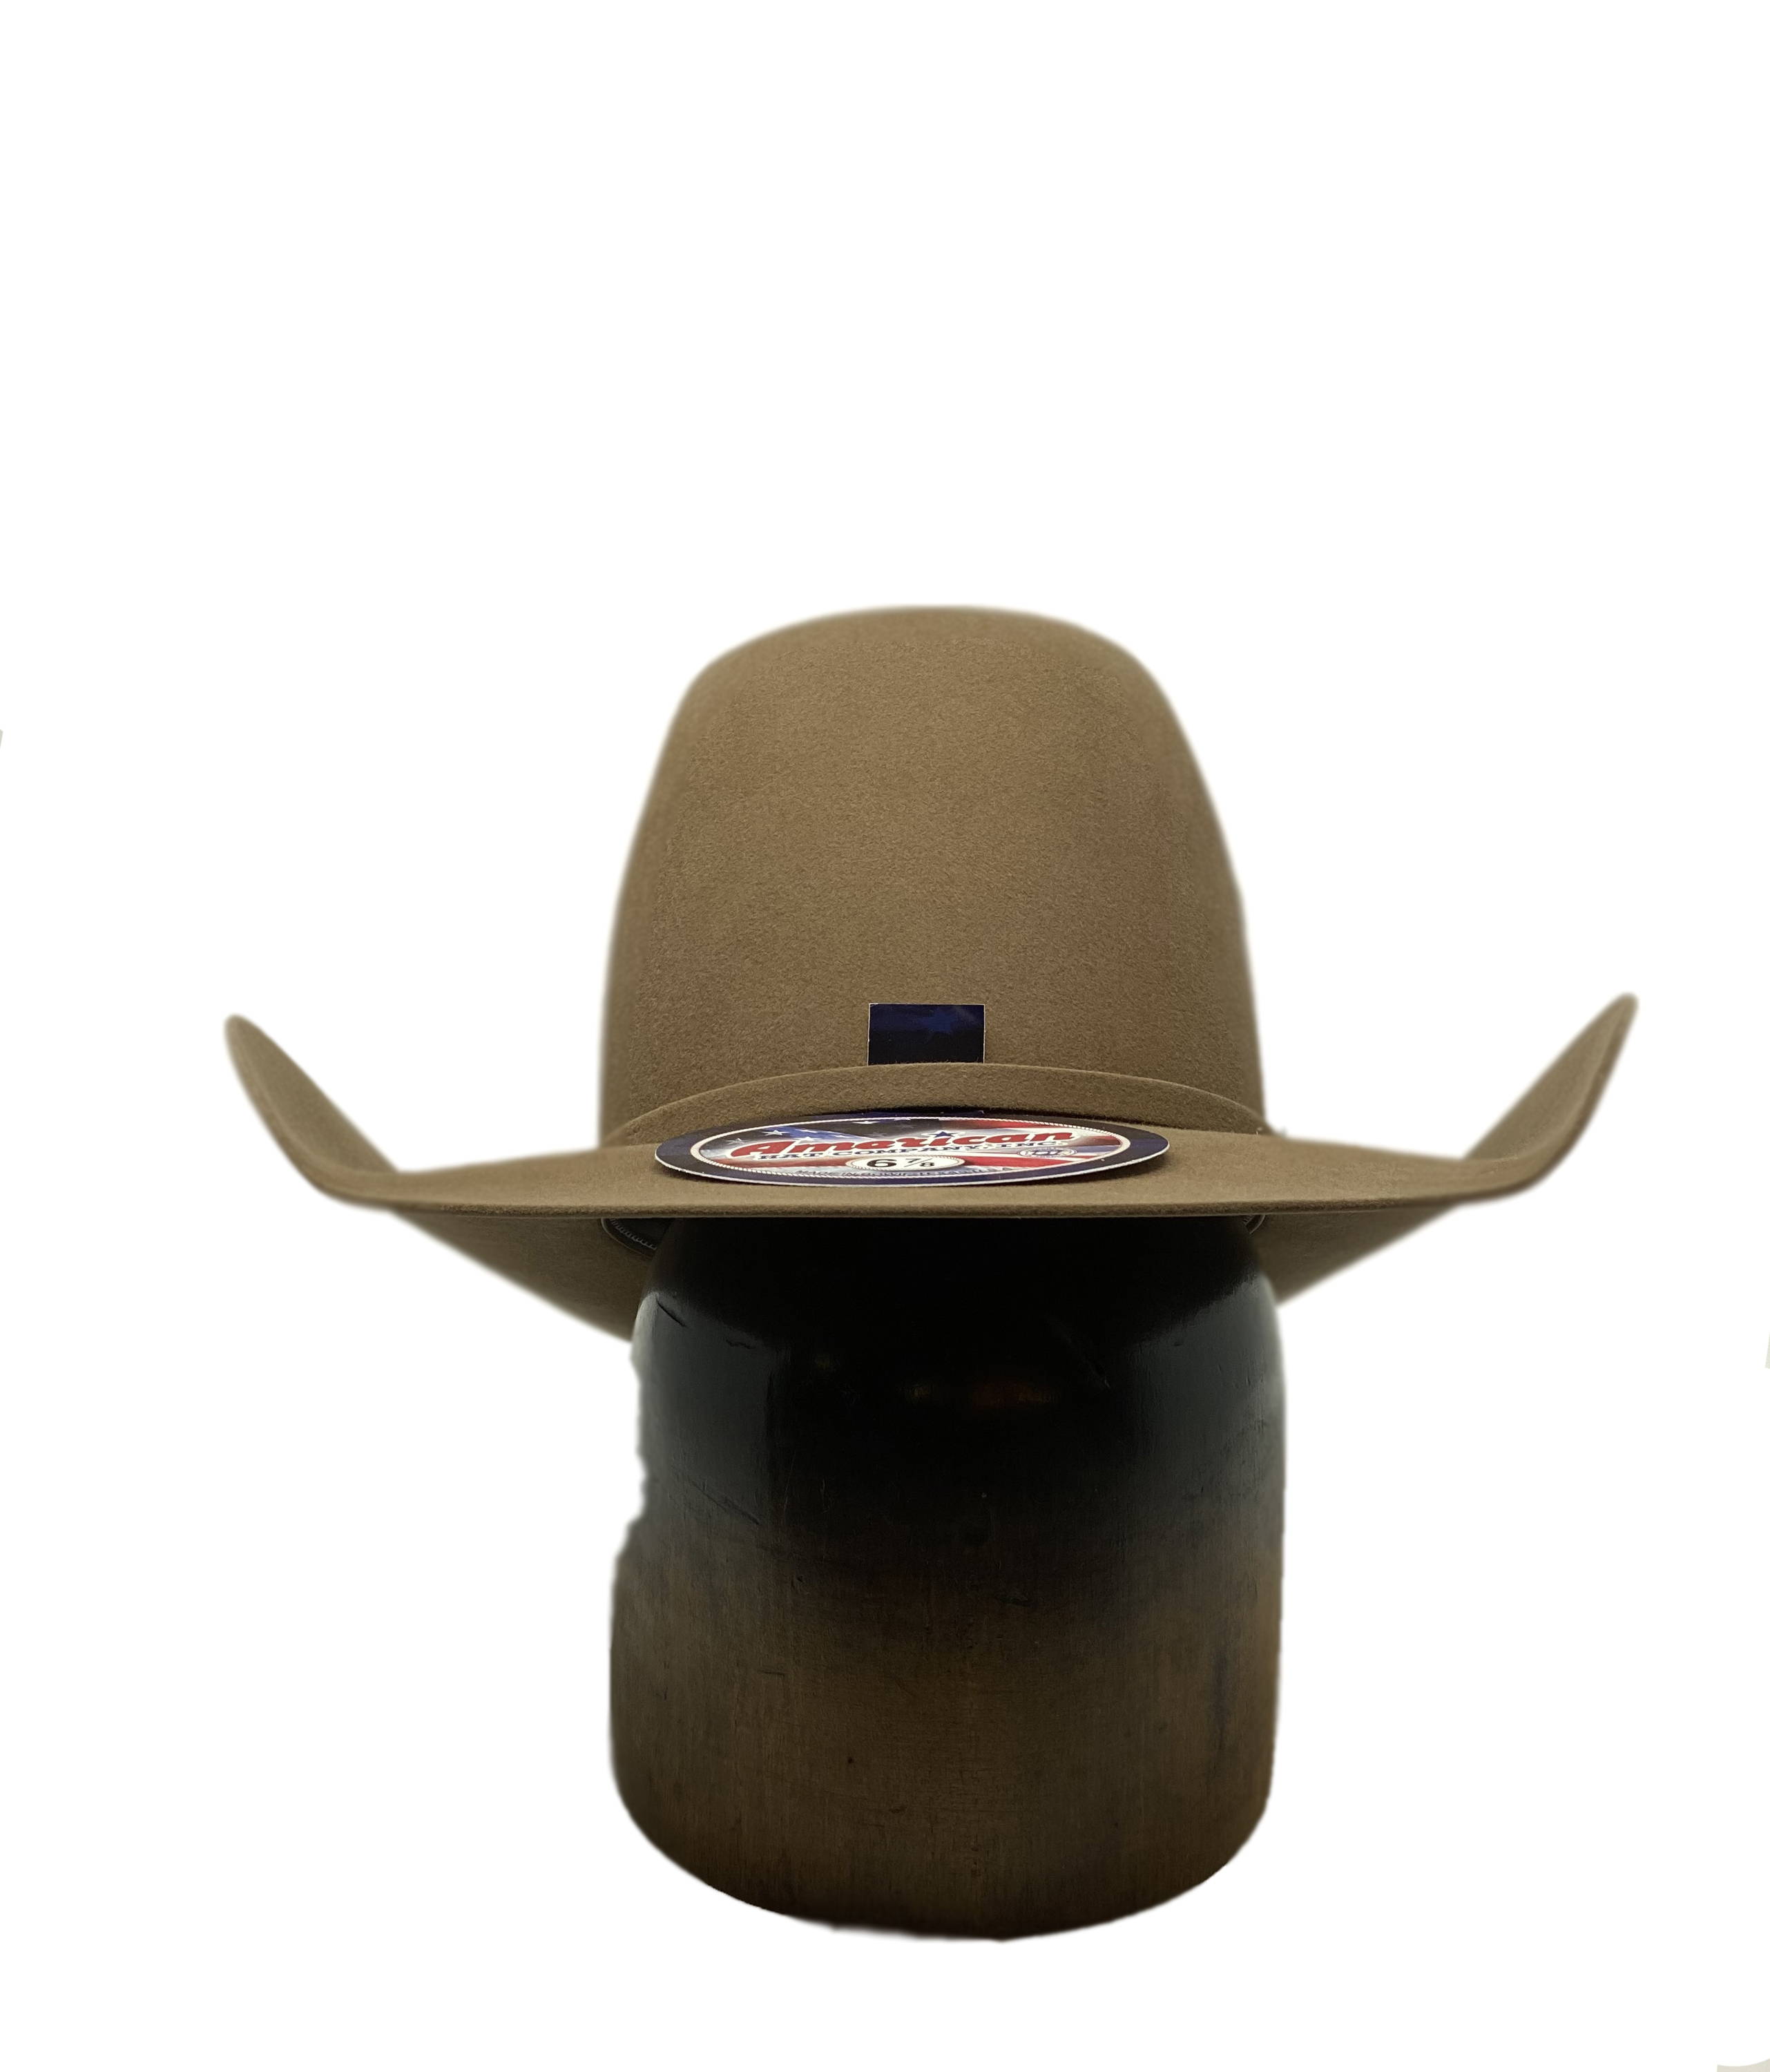 2020 Jobes Hats Straw Hat “Tornado” 4” Brim